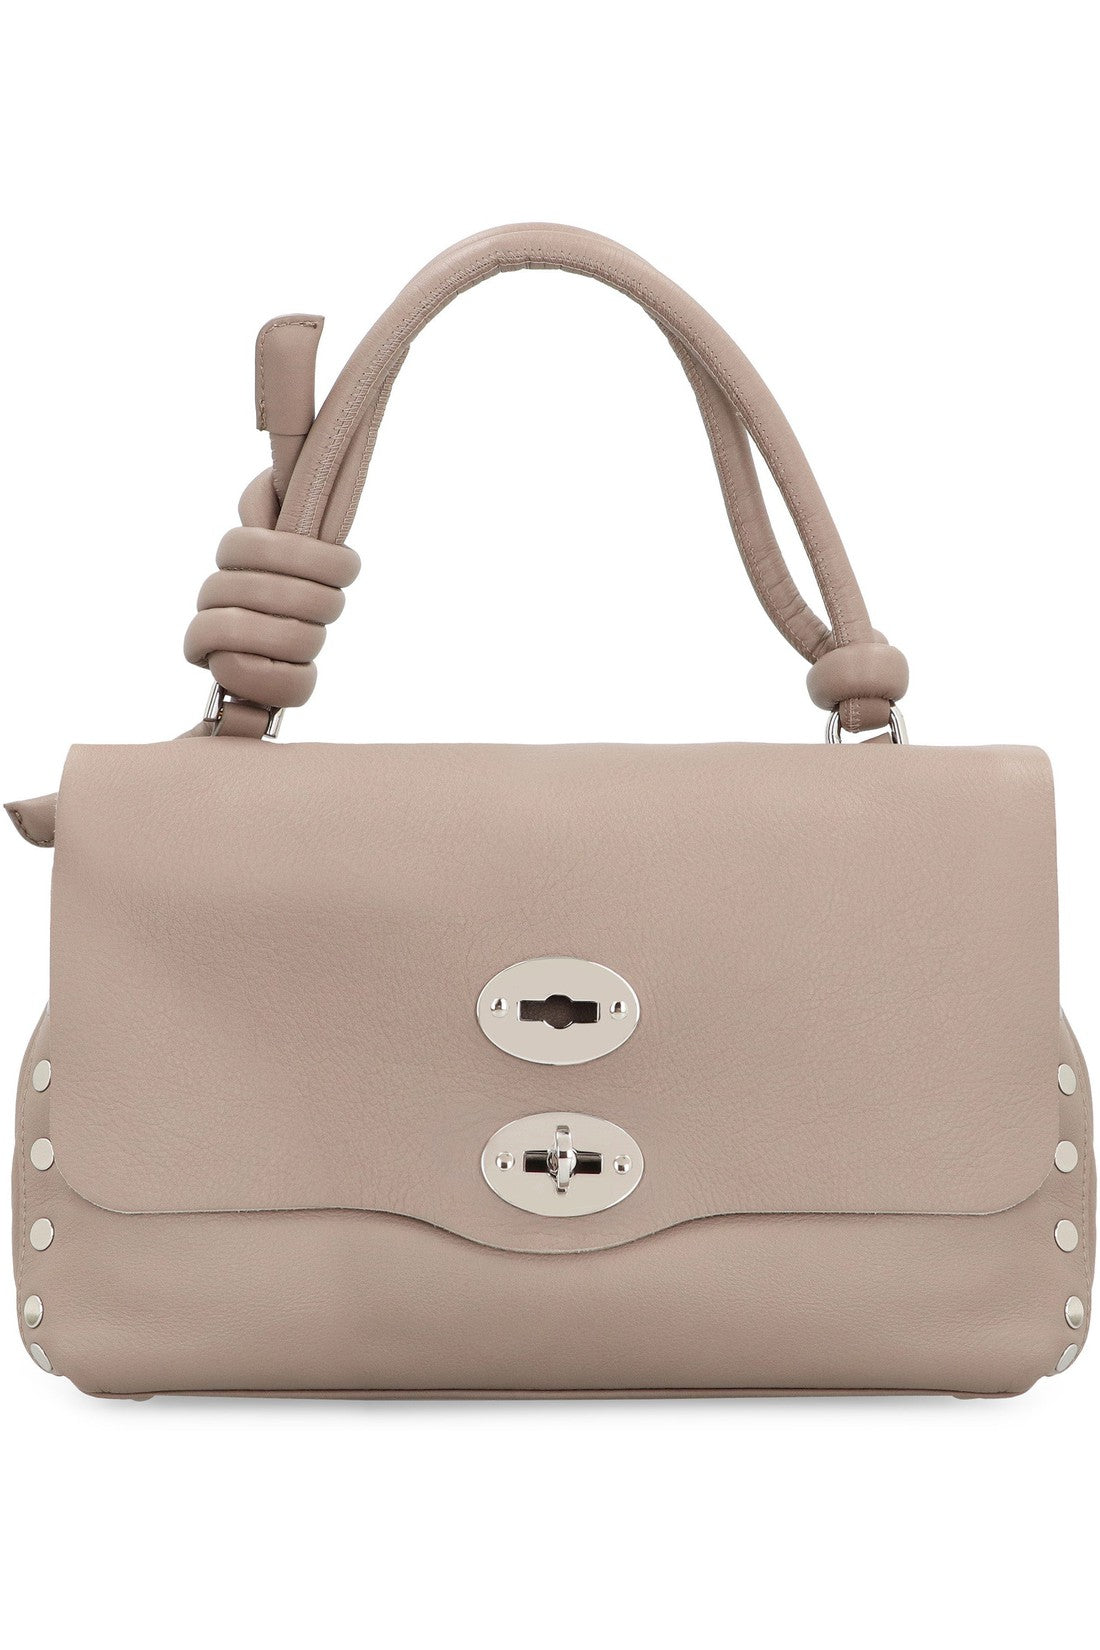 Zanellato-OUTLET-SALE-Postina S leather handbag-ARCHIVIST